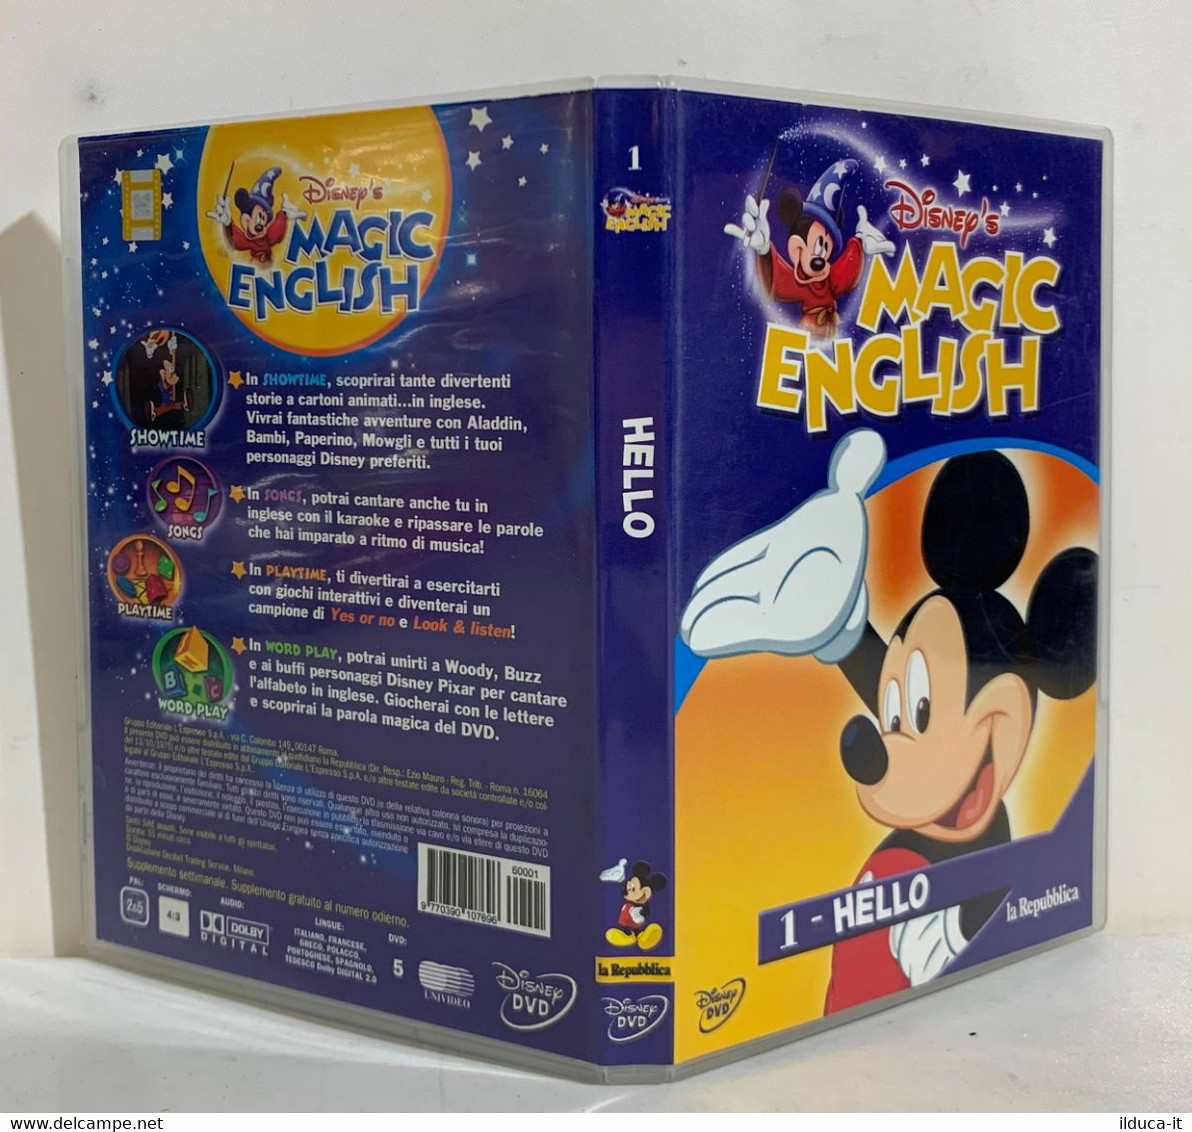 I102332 DVD - Disney's Magic English N. 1 - Hello - Dibujos Animados